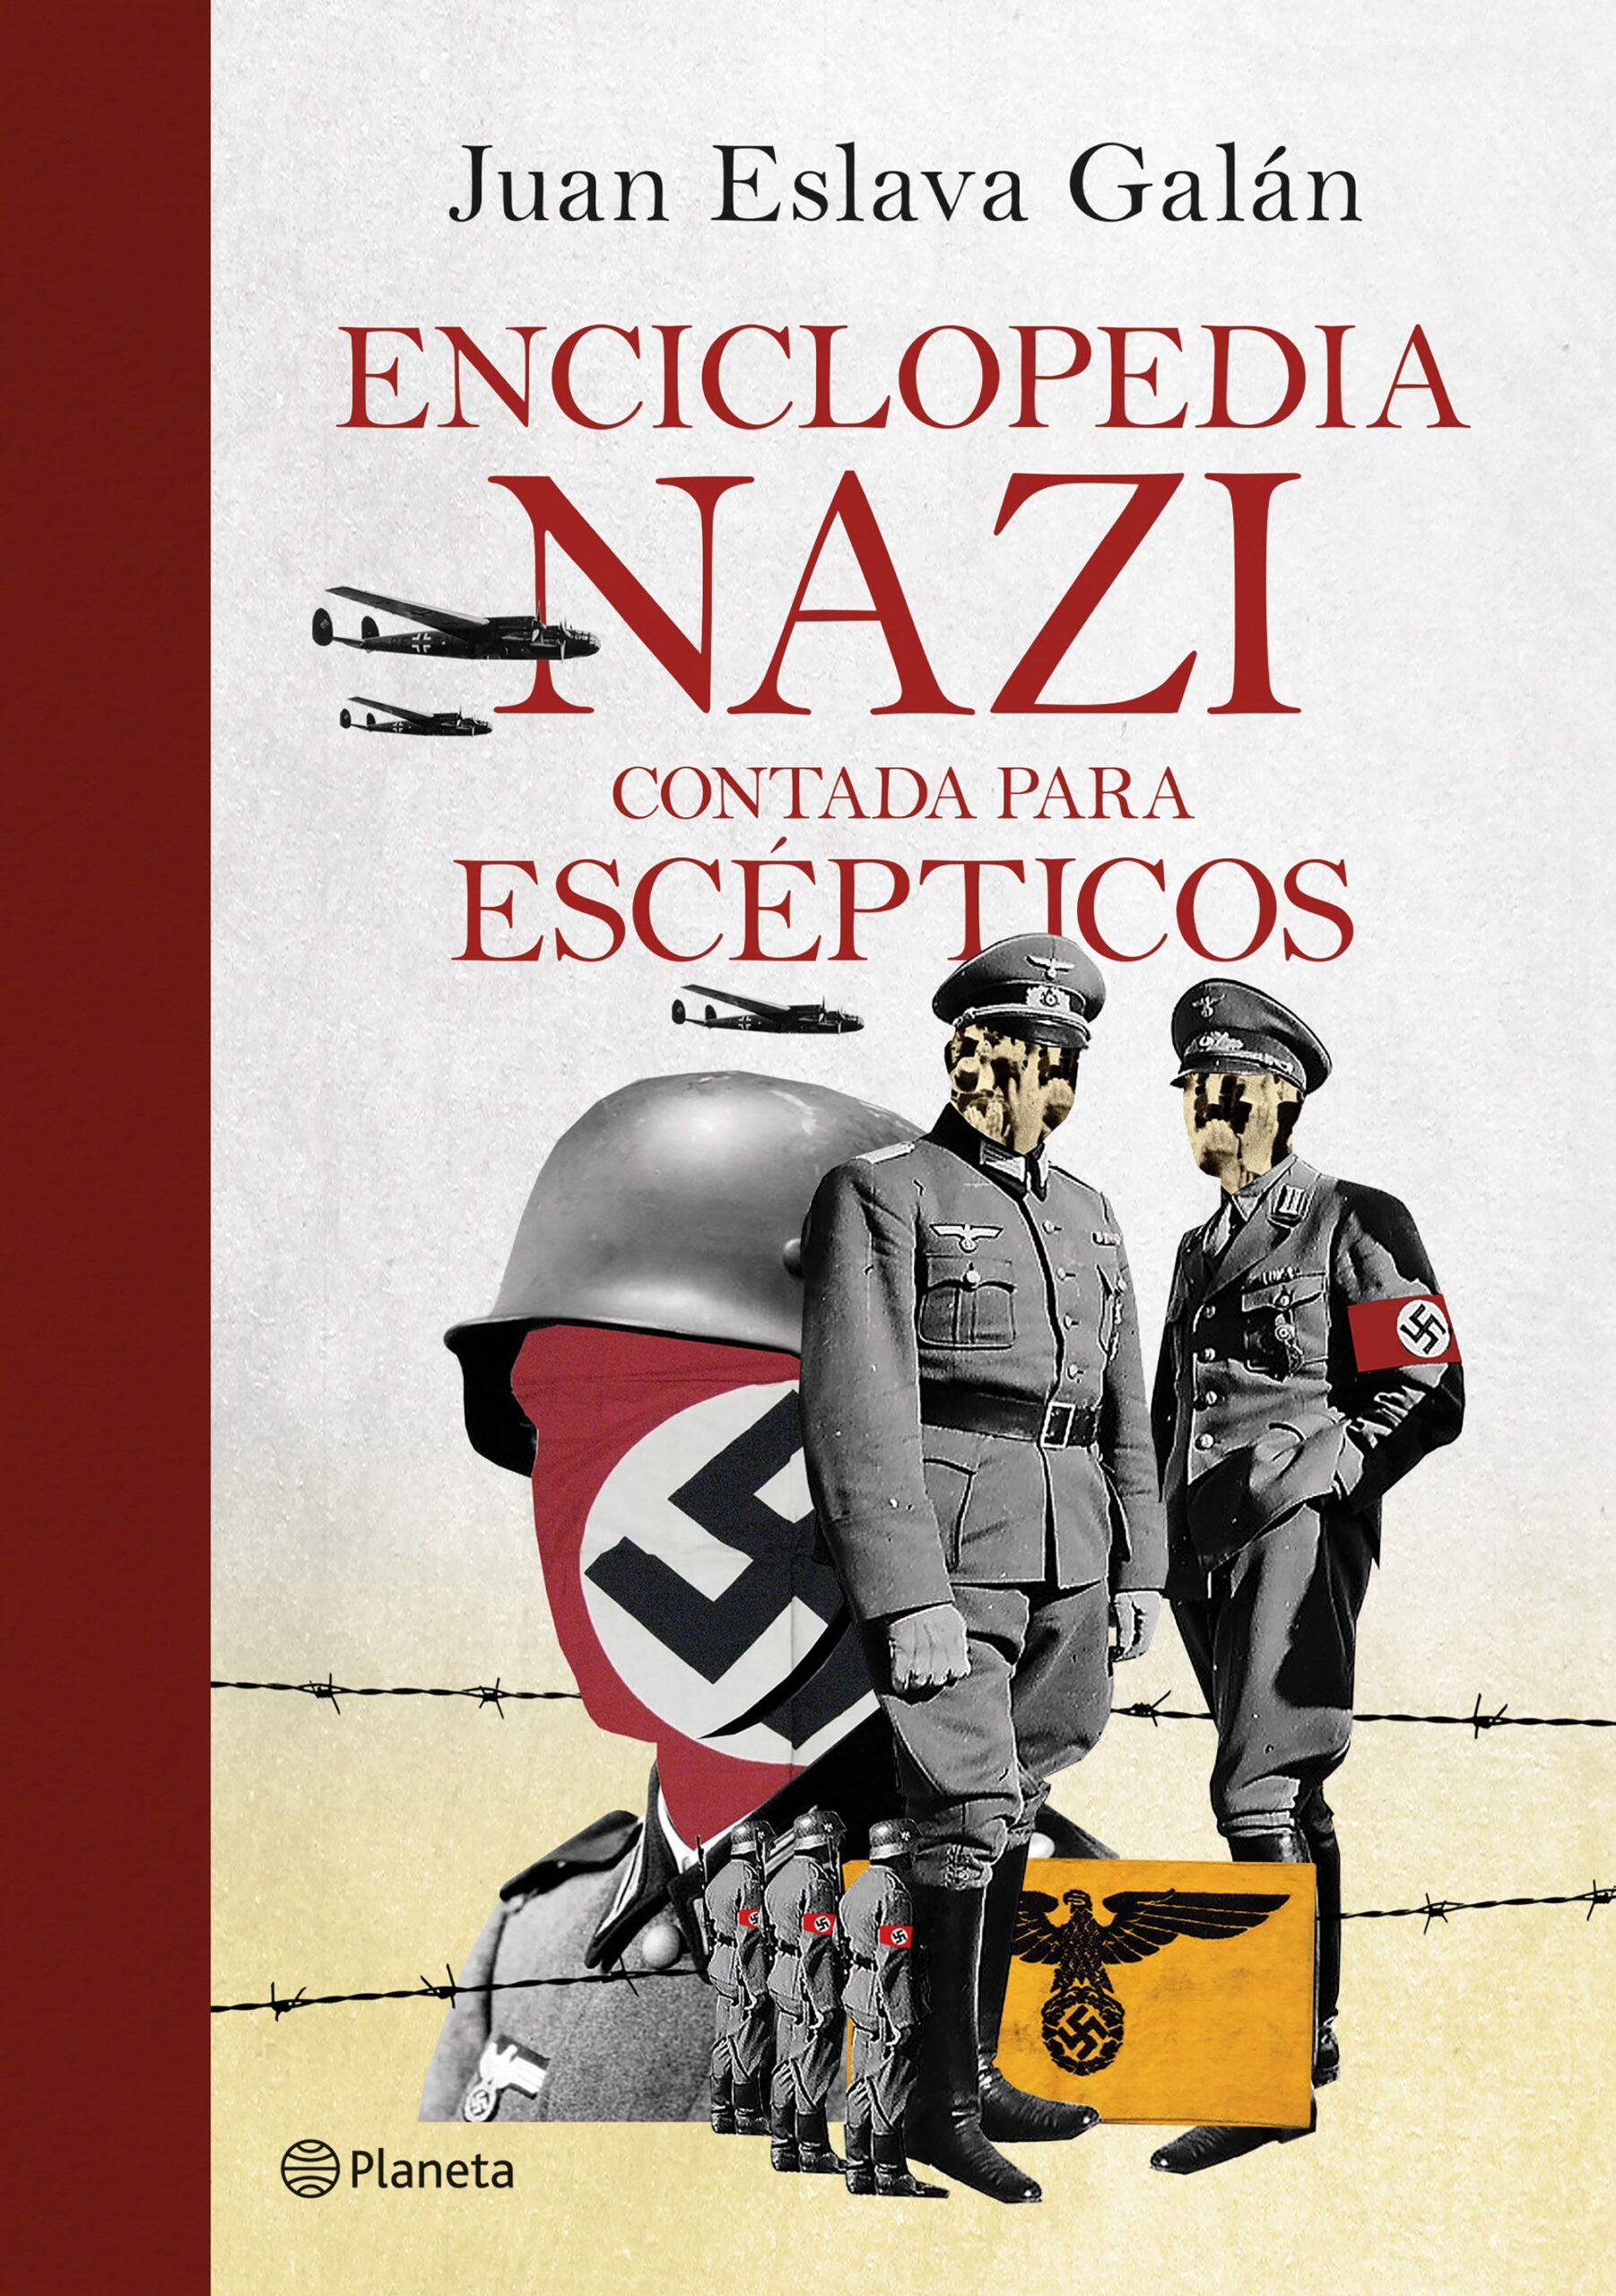 Juan Eslava Galán - Enciclopedia nazi para escépticos